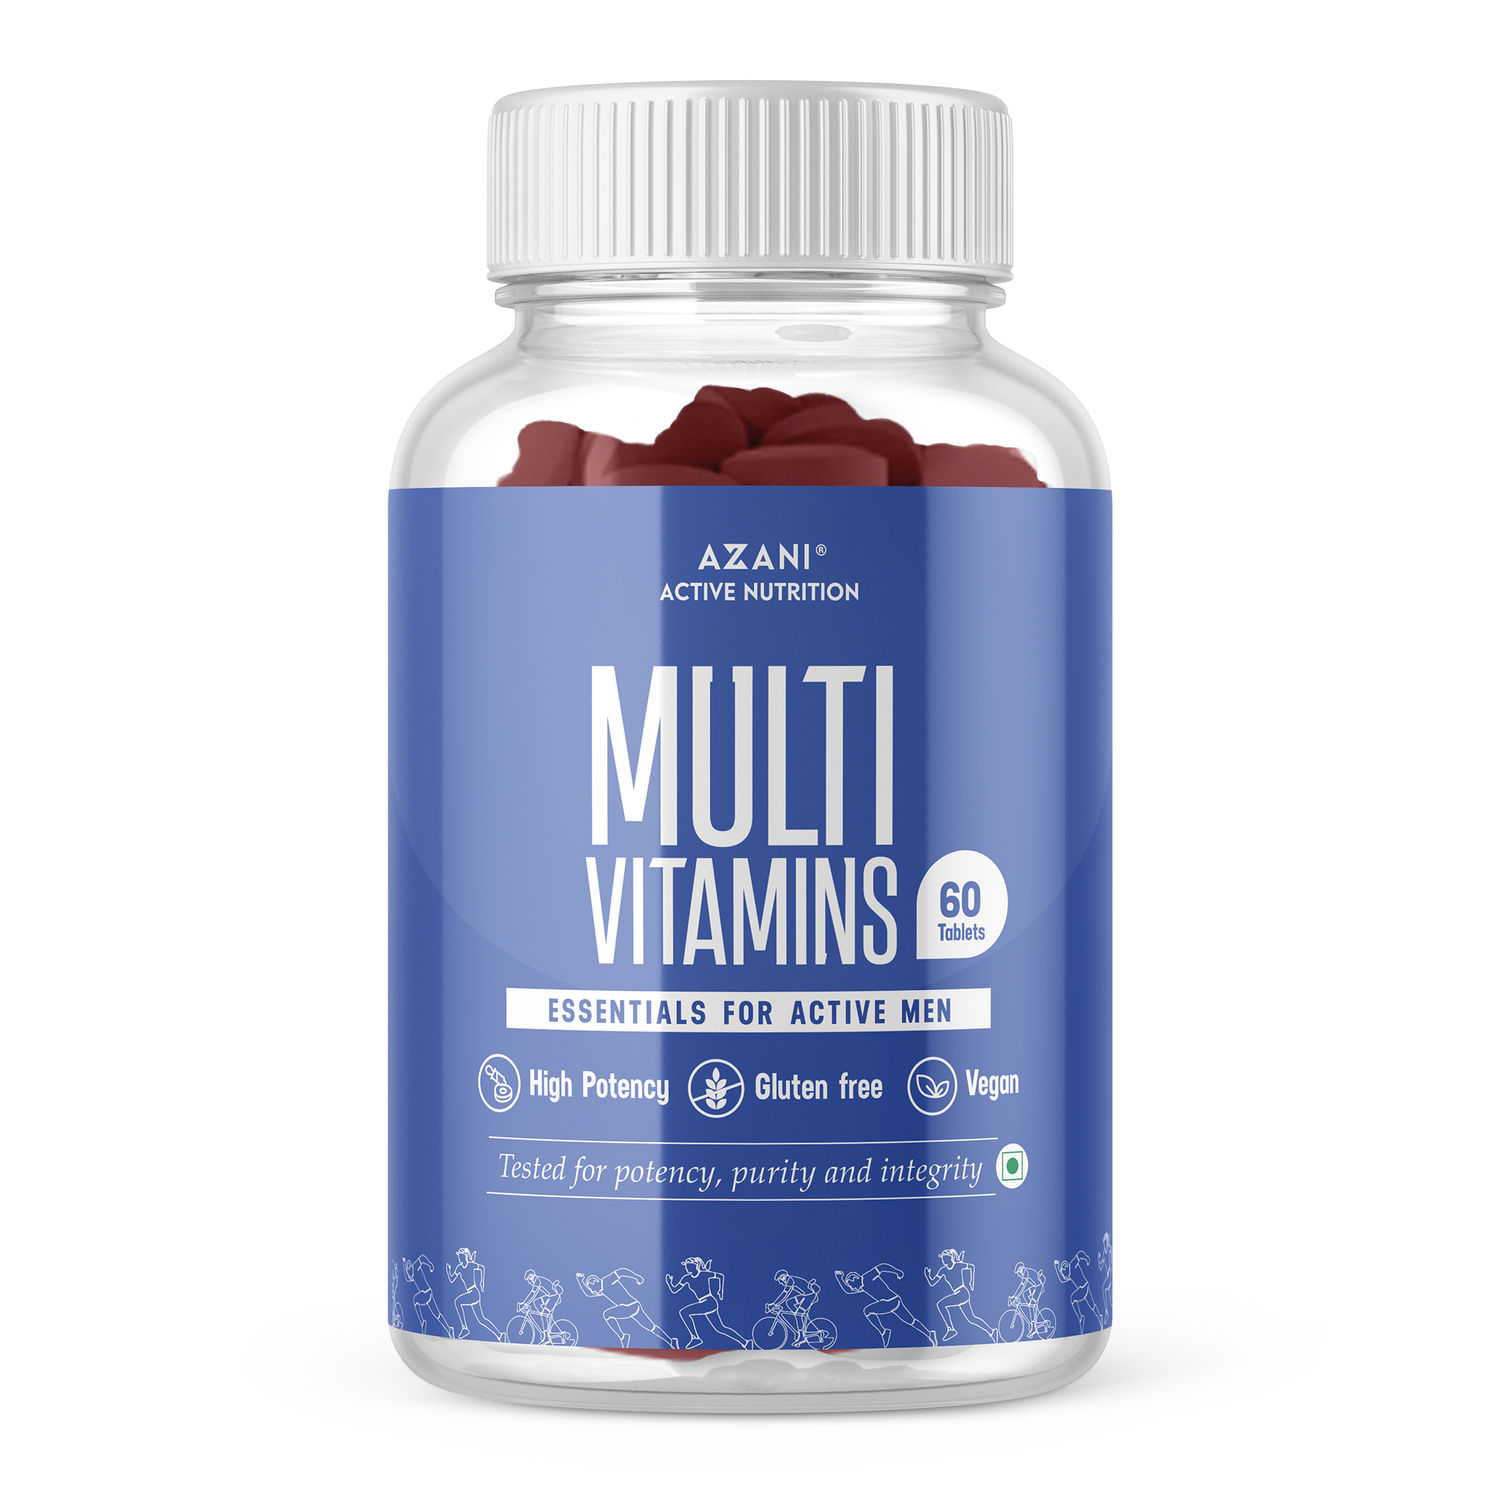 Buy Azani Active Nutrition Multivitamin Tablets for Men | Vitamin C, Vitamin D, Calcium, Iron, Magnesium & Zinc | Vitamins, Minerals & Antioxidants for Active Men - 60 Tablets - Purplle